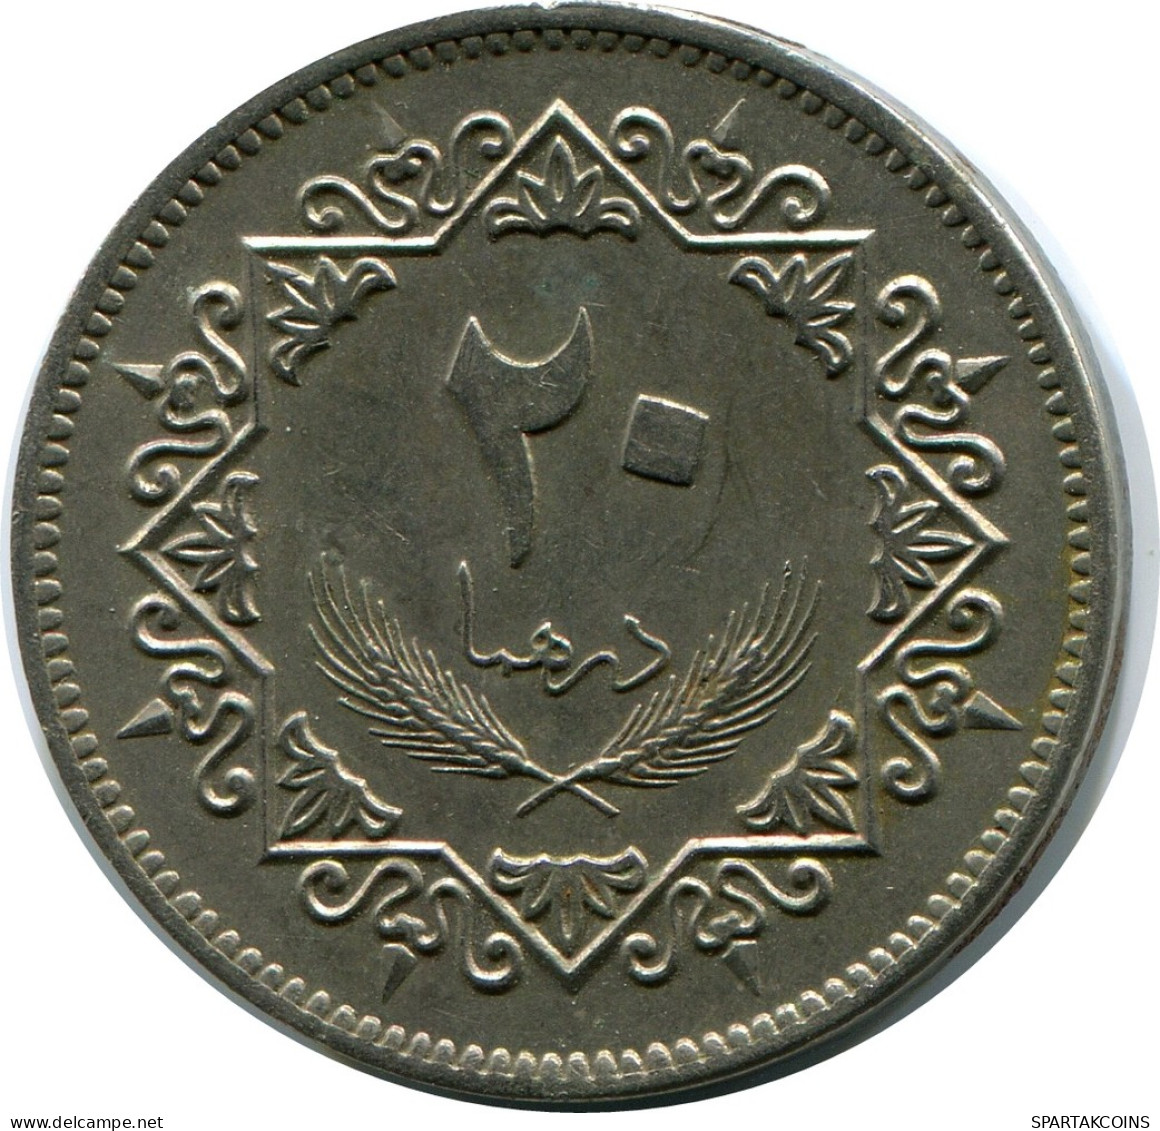 20 DIRHAMS 1975 LIBIA LIBYA Islámico Moneda #AH615.3.E - Libye